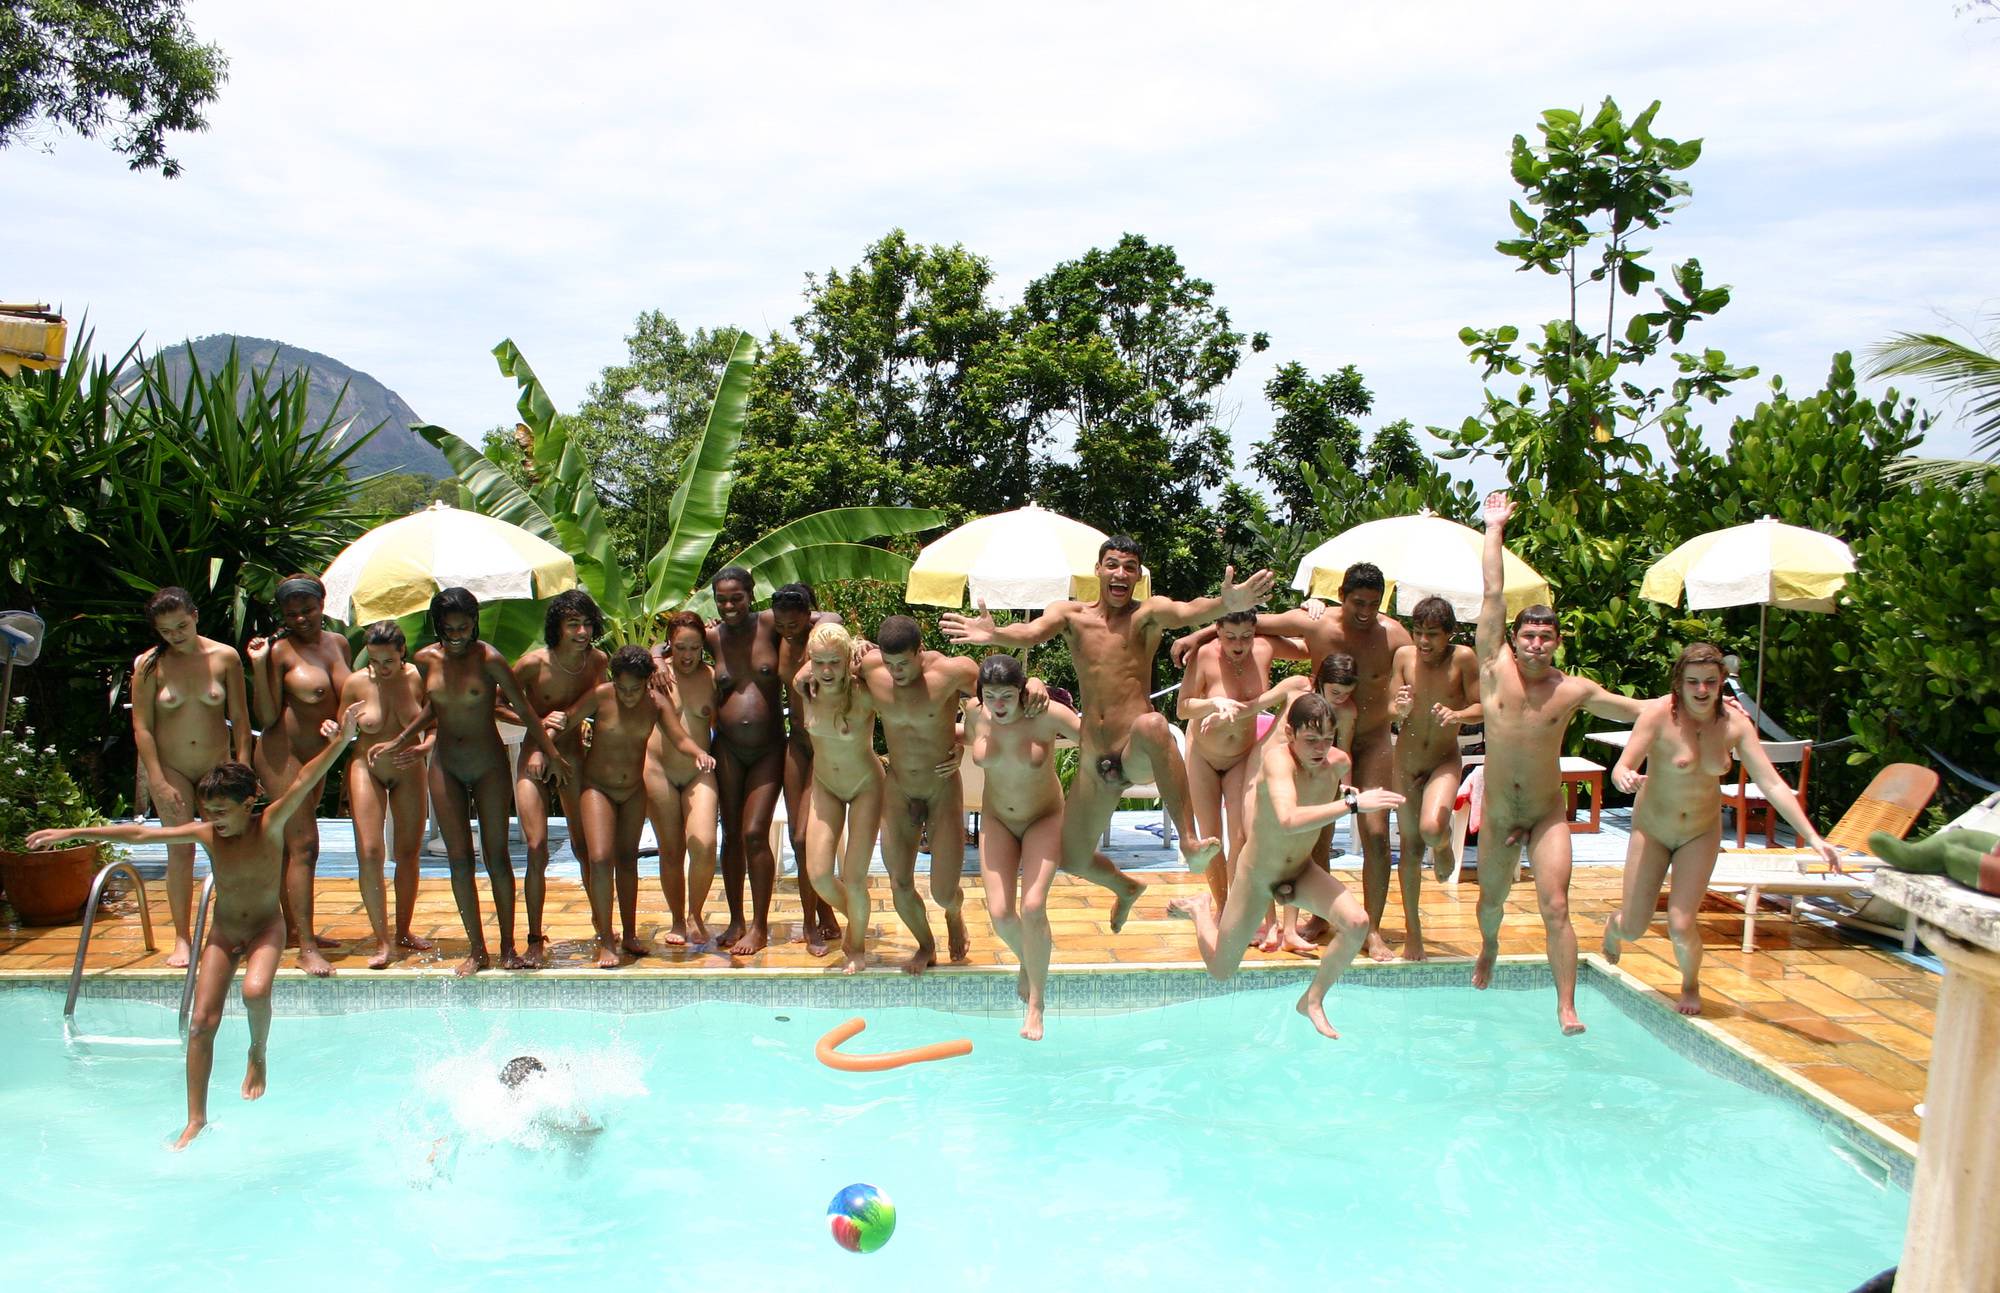 Purenudism Brazilian Pool Group Jump - 2